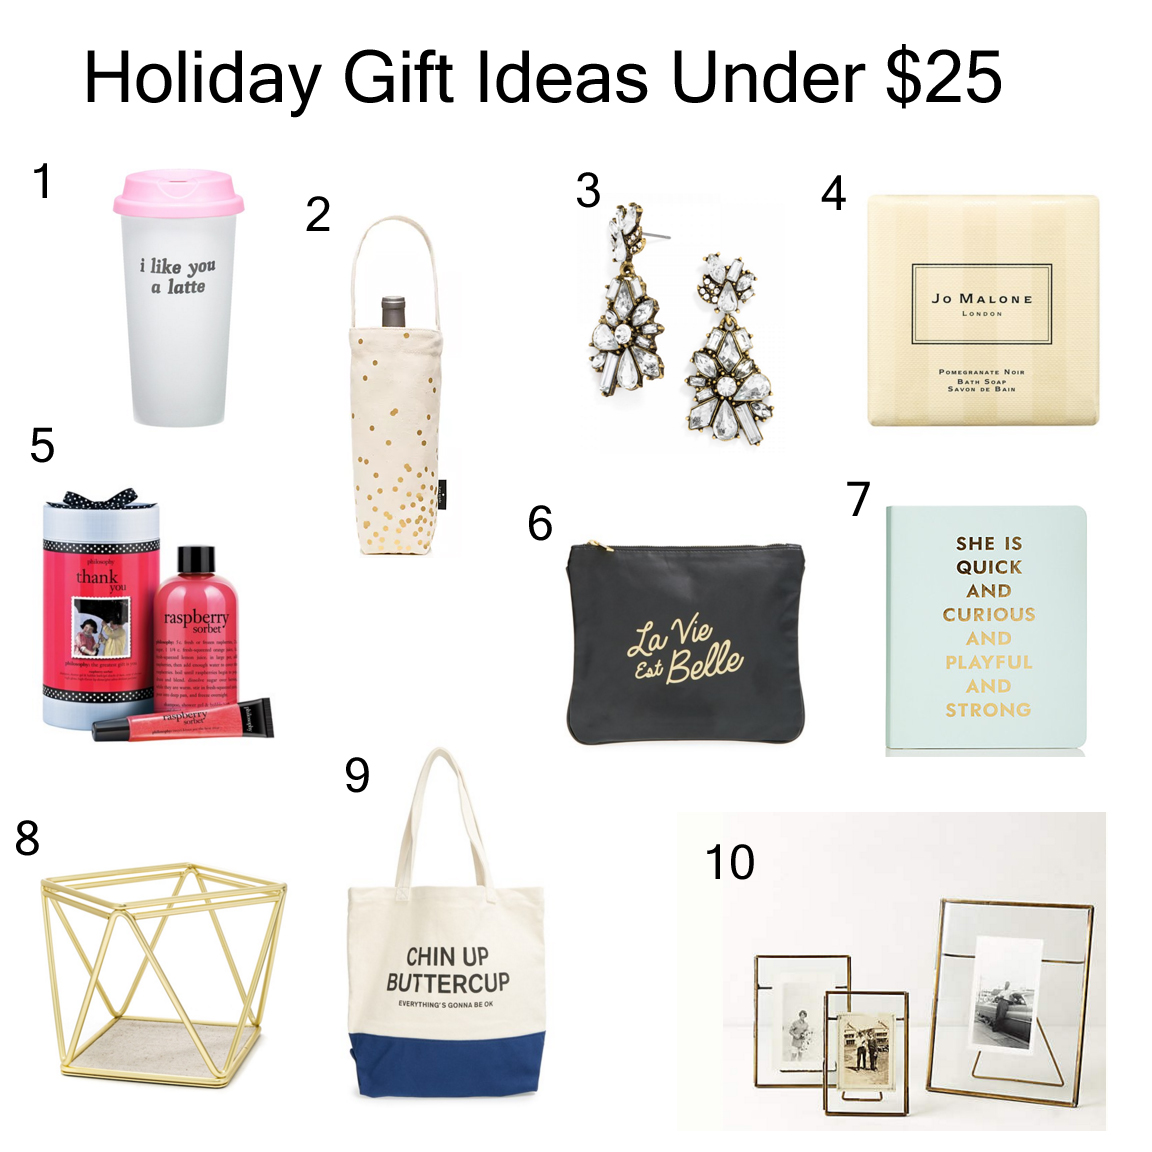 Top Gift Ideas She Will Love Under $25 - Paper del Sol